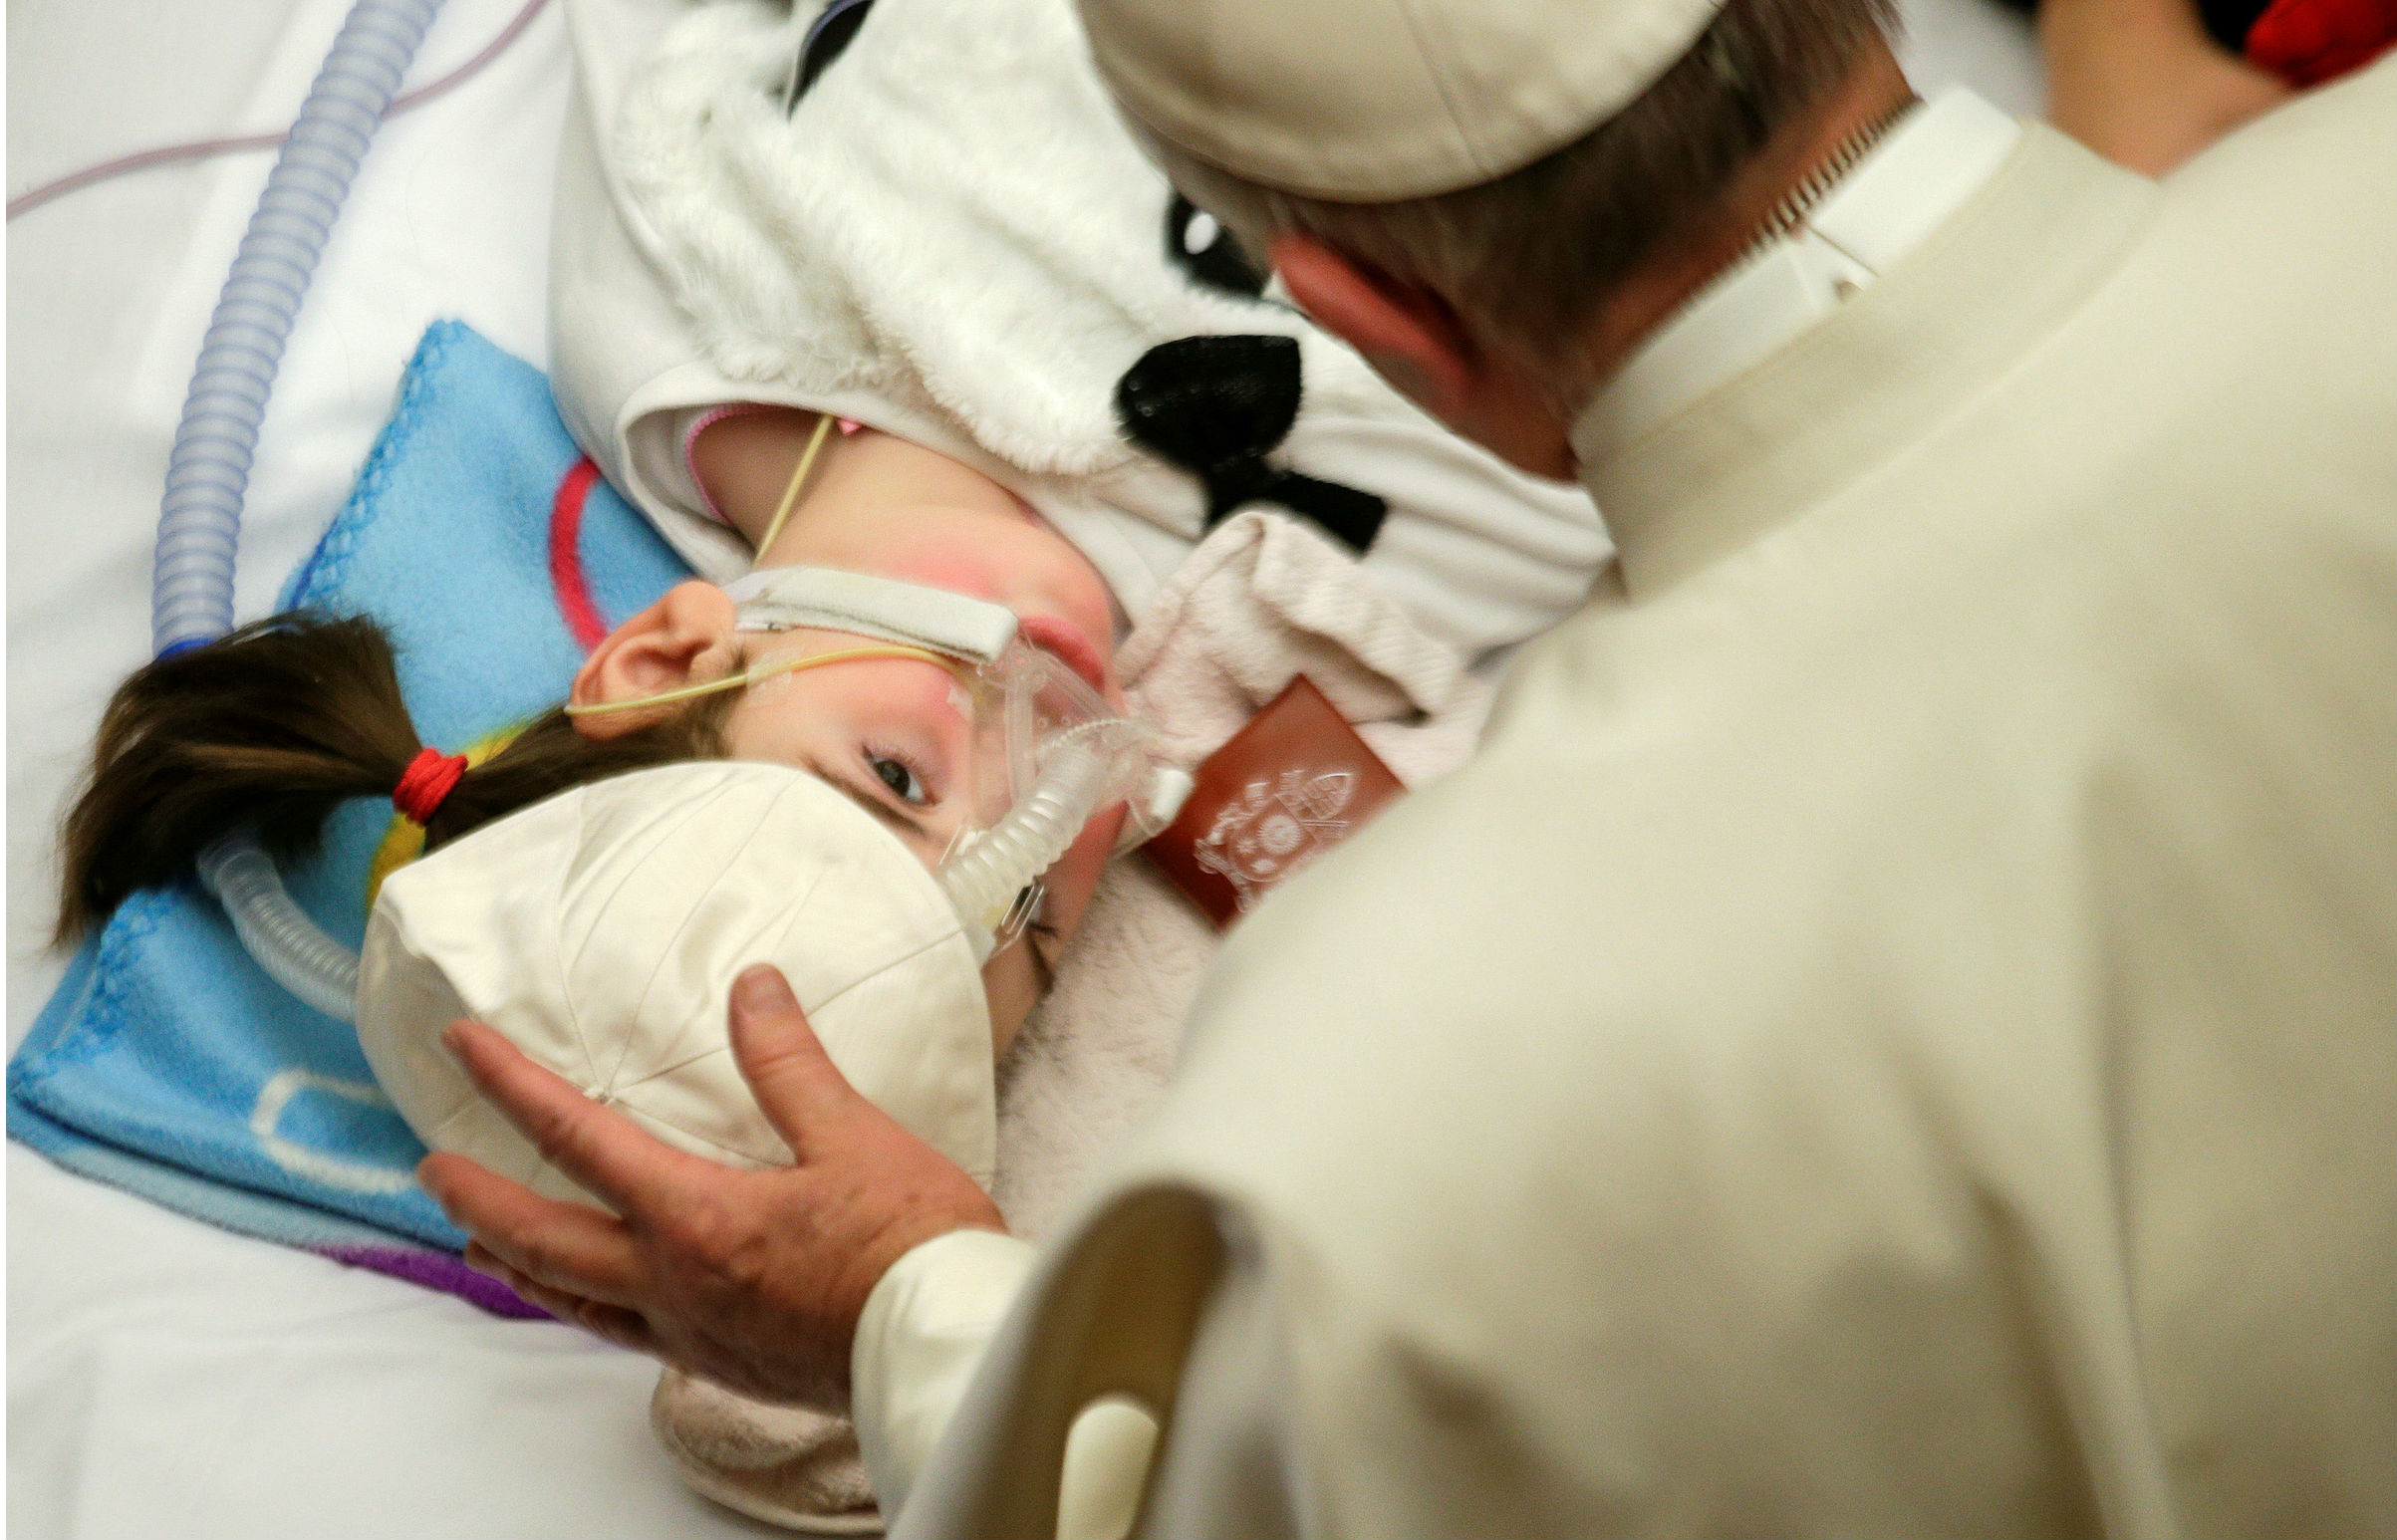 Vatican denies allegations that Bambino Gesù hospital 'cut corners' to boost profits 